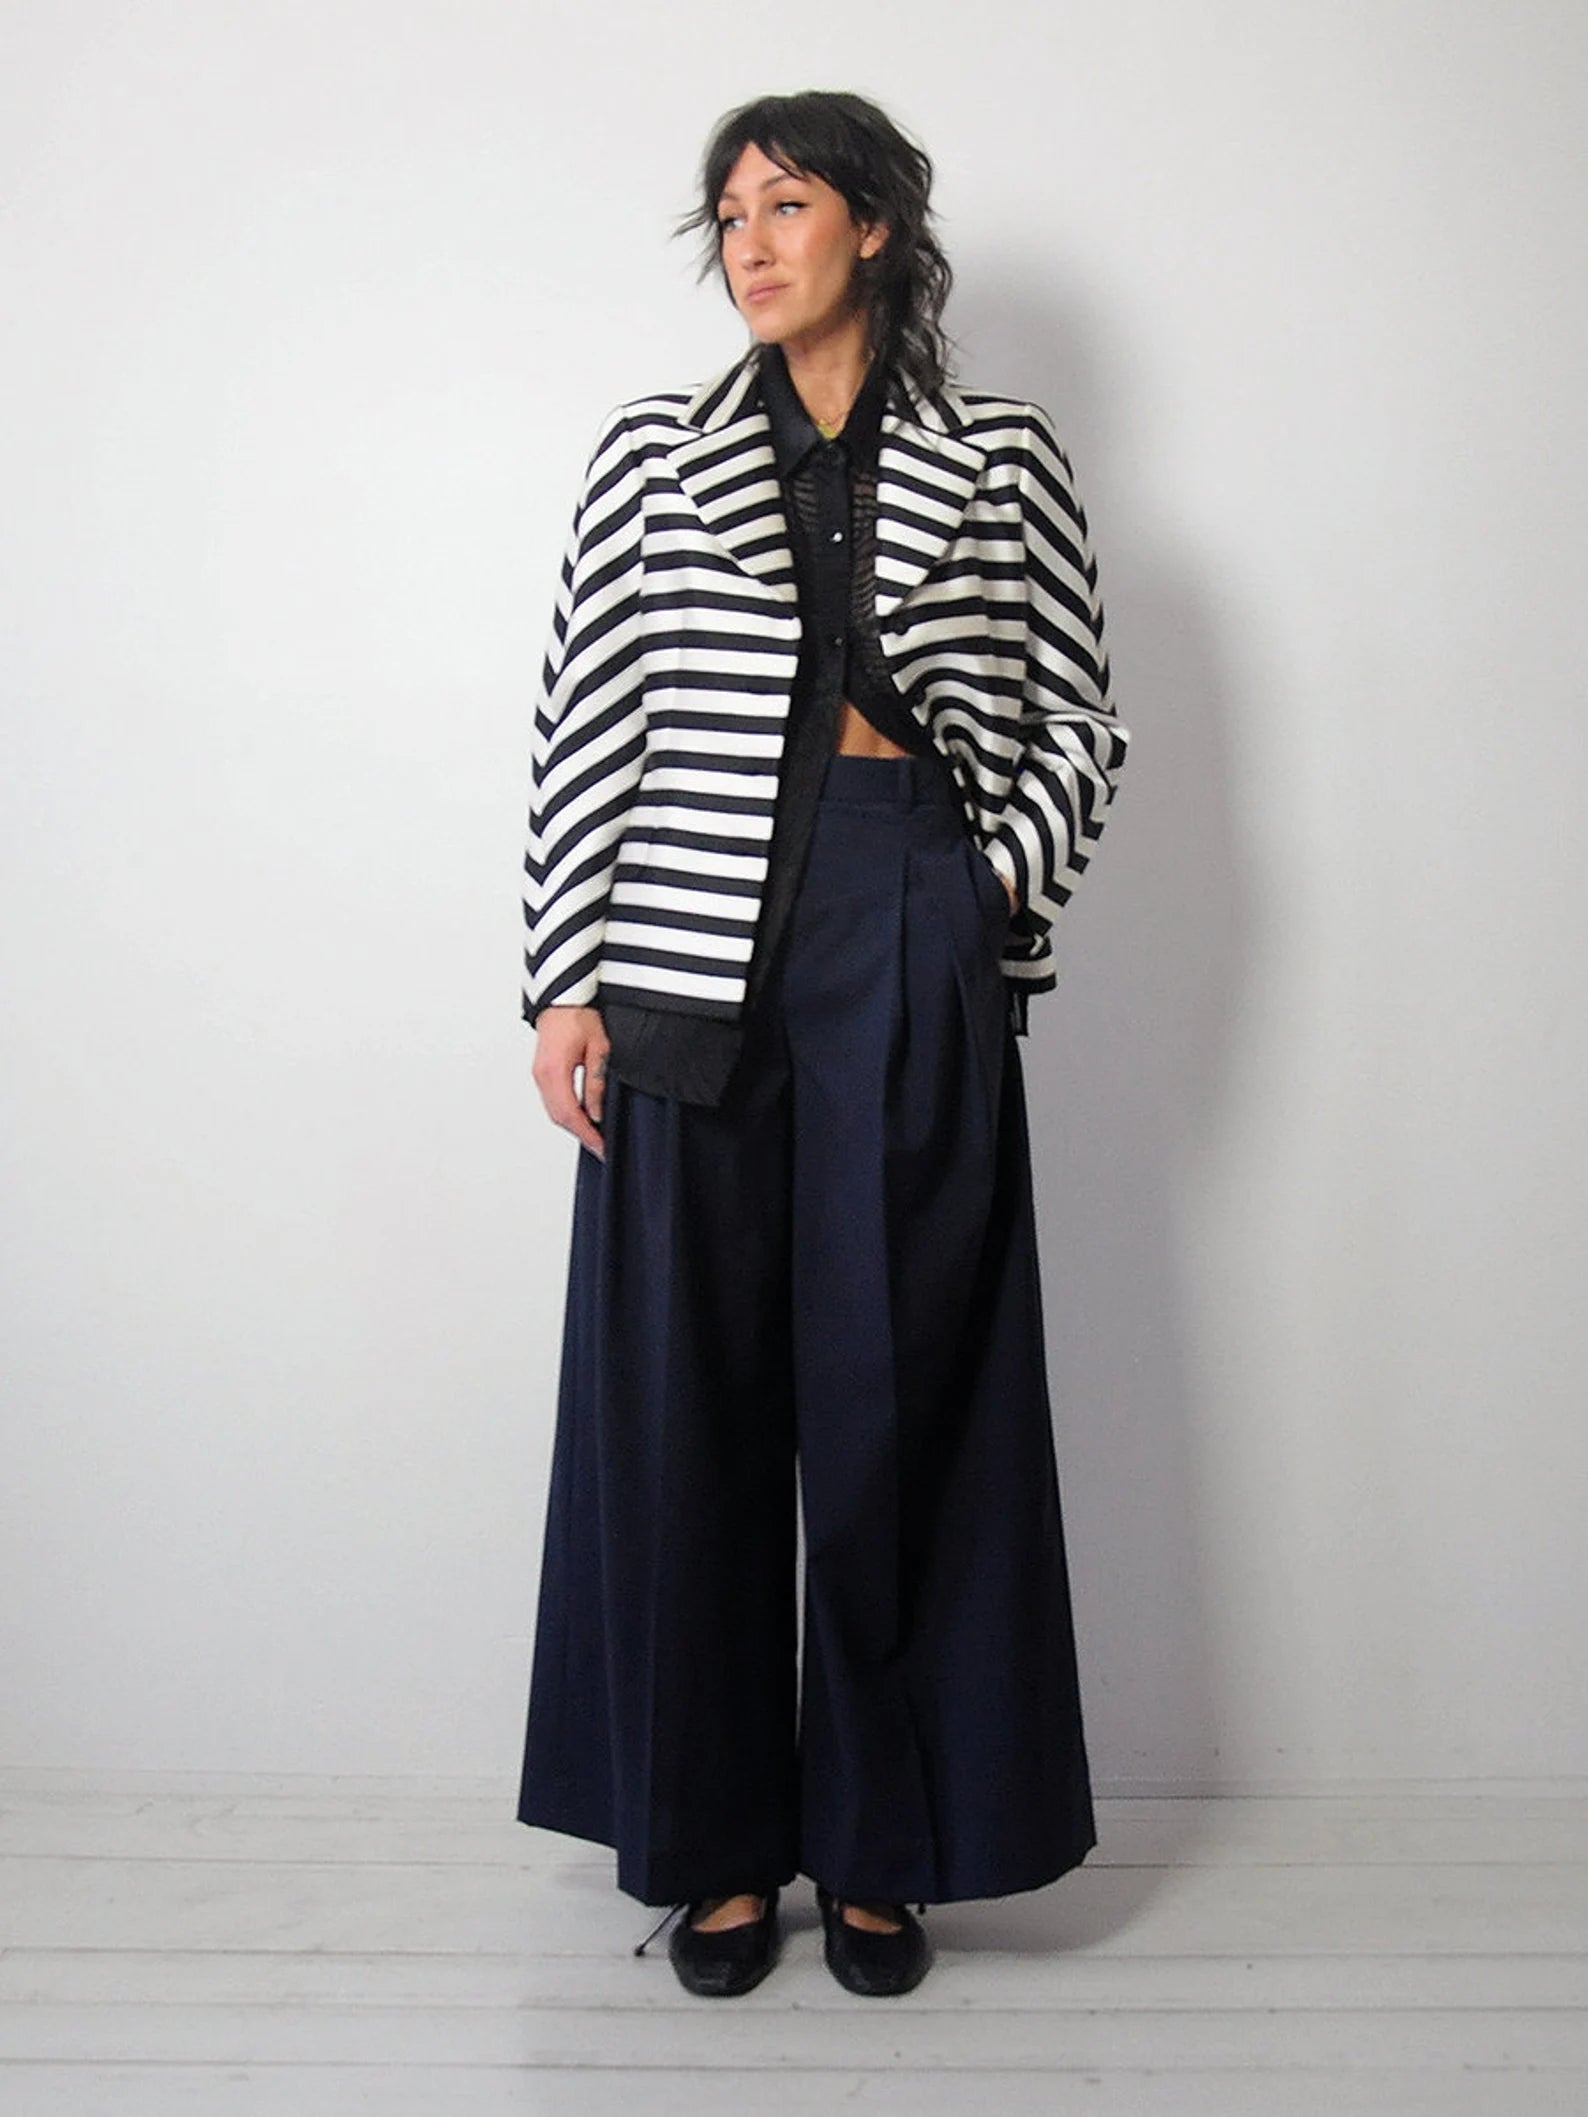 Silk & Wool Striped Blazer